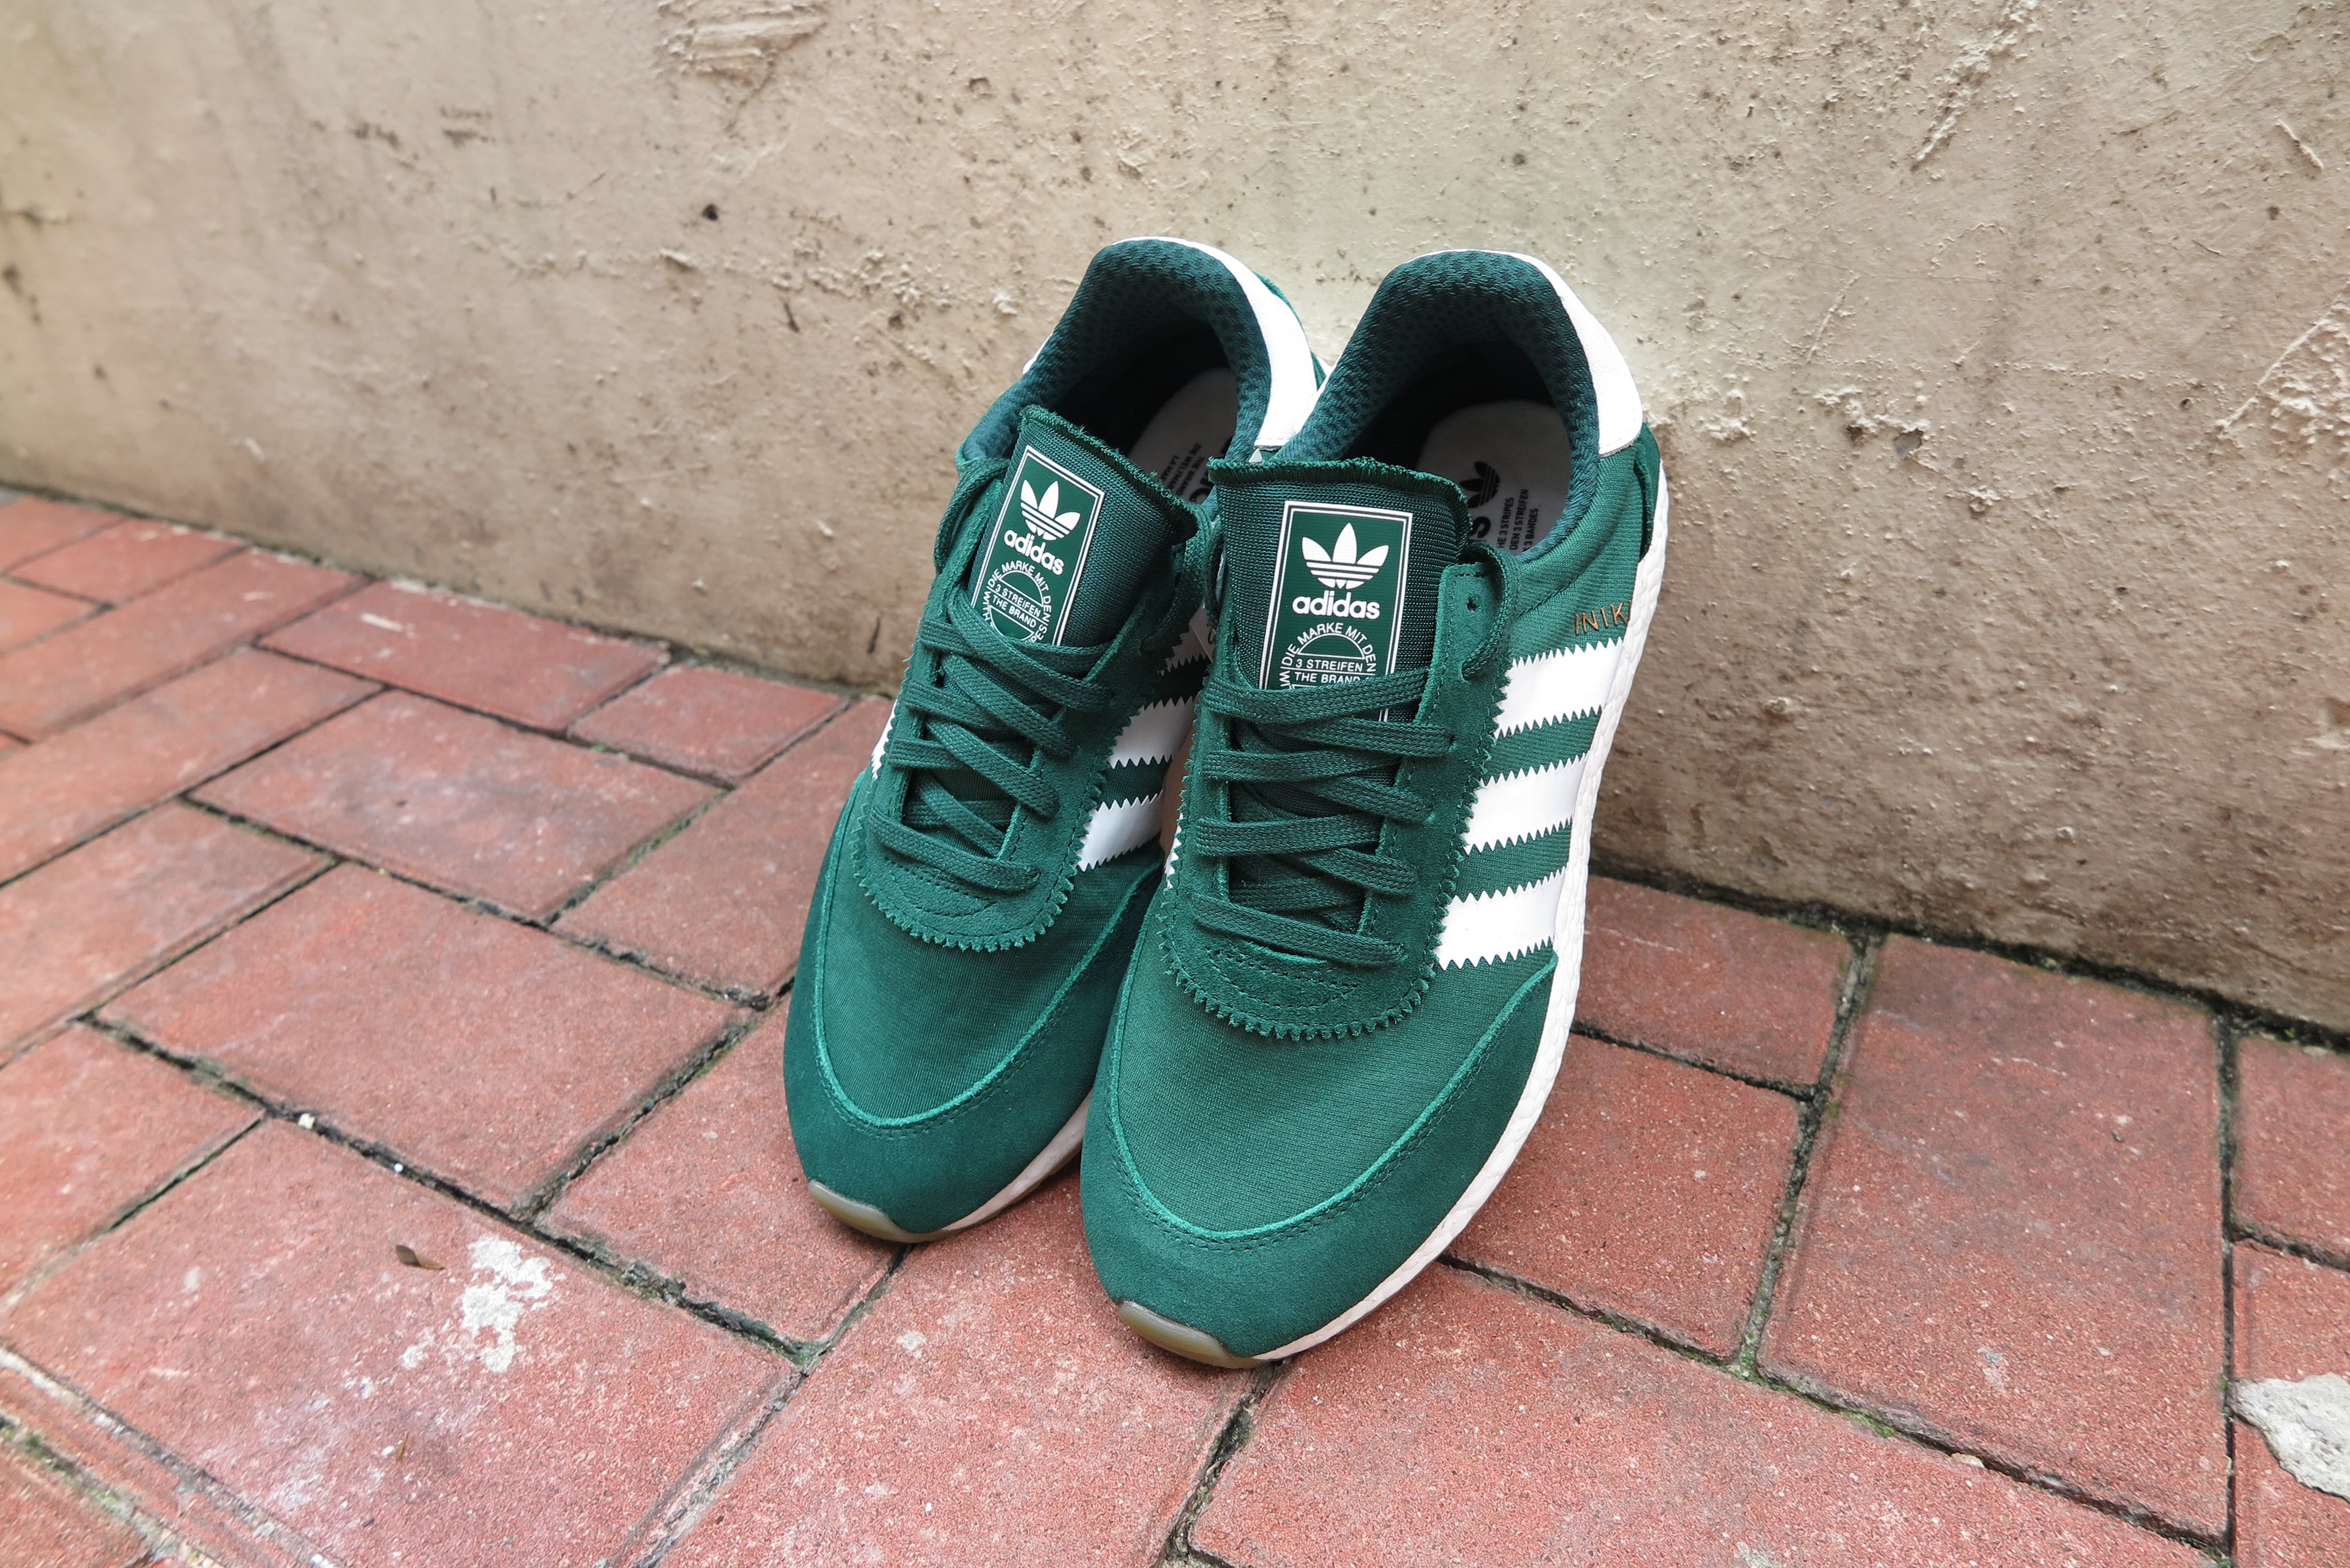 adidas I-5923(Iniki Runner Boost) - Collegiate Green/Footwear White/Gu